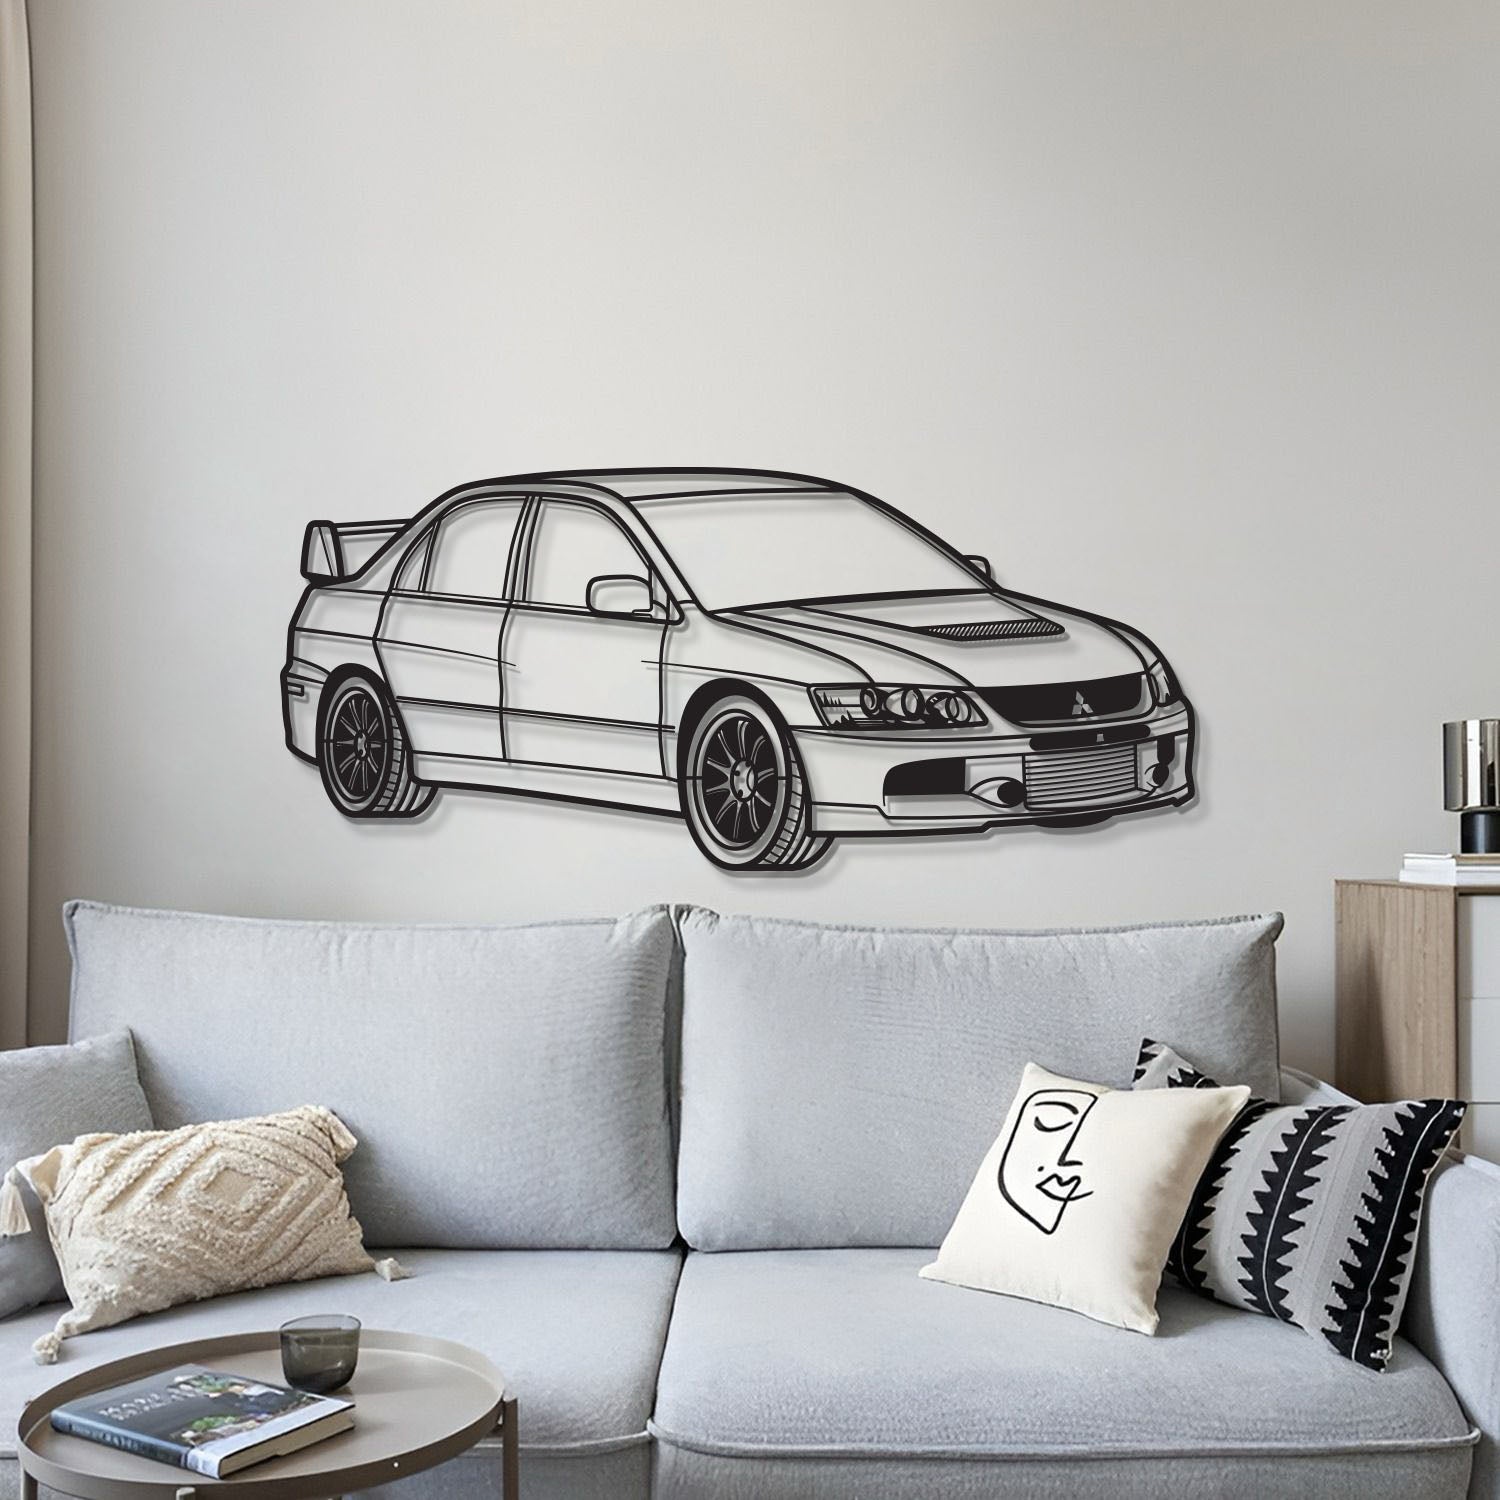 Lancer Evo IX Perspective Metal Car Wall Art - MT1131